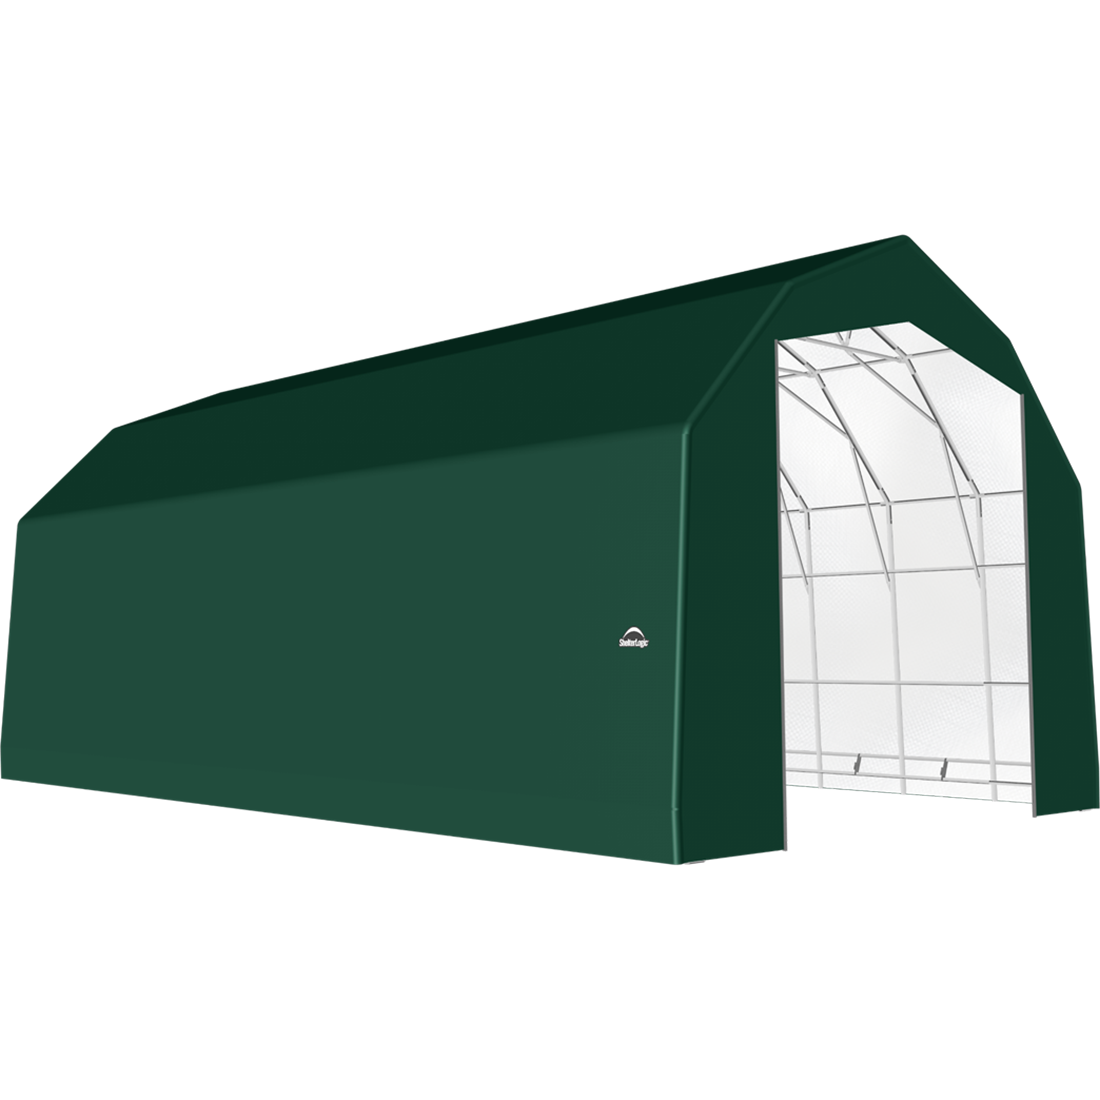 ShelterTech SP Series Barn Shelter, 25 ft. x 40 ft. x 20 ft. Heavy Duty PVC 14.5 oz. Green